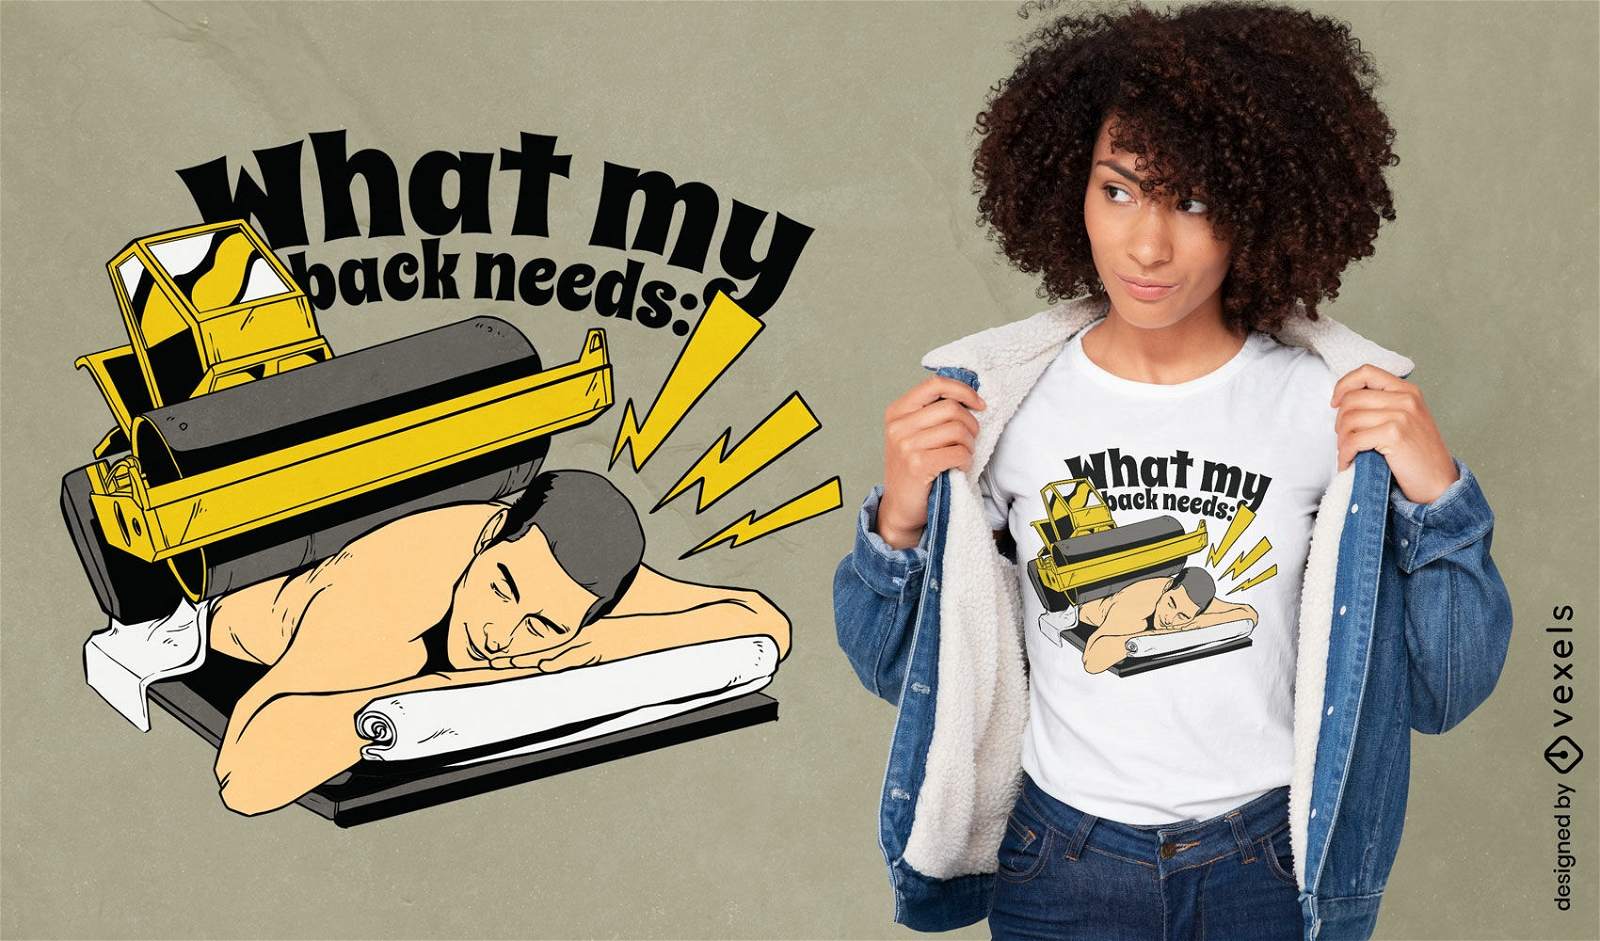 Funny steamroller massage t-shirt design